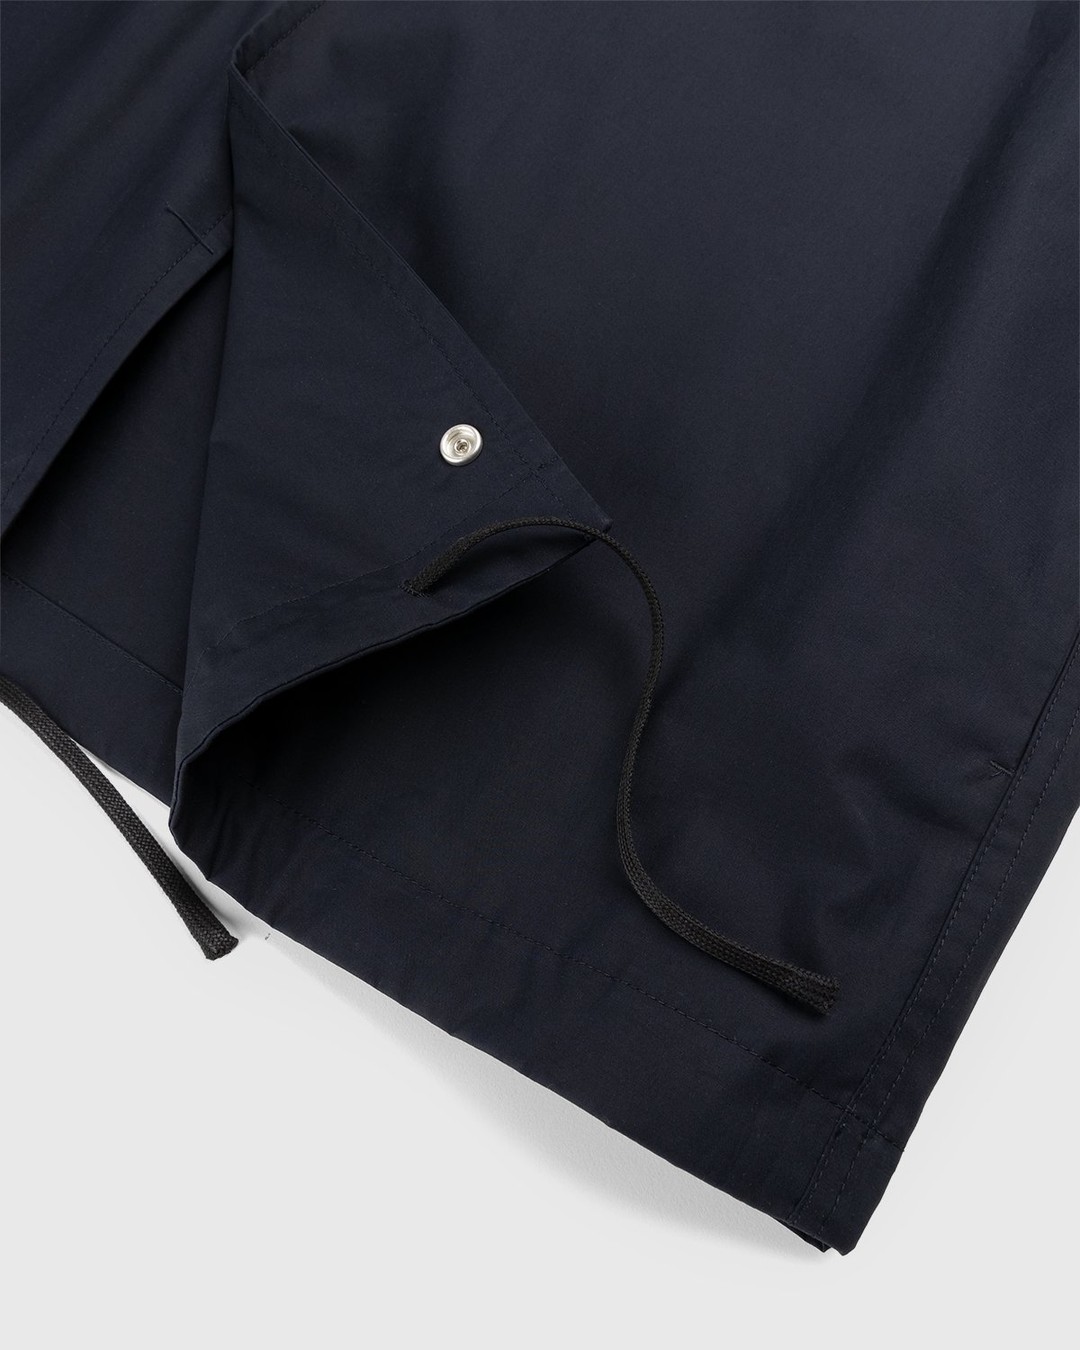 Jil Sander – Logo Jacket Navy - Outerwear - Blue - Image 4